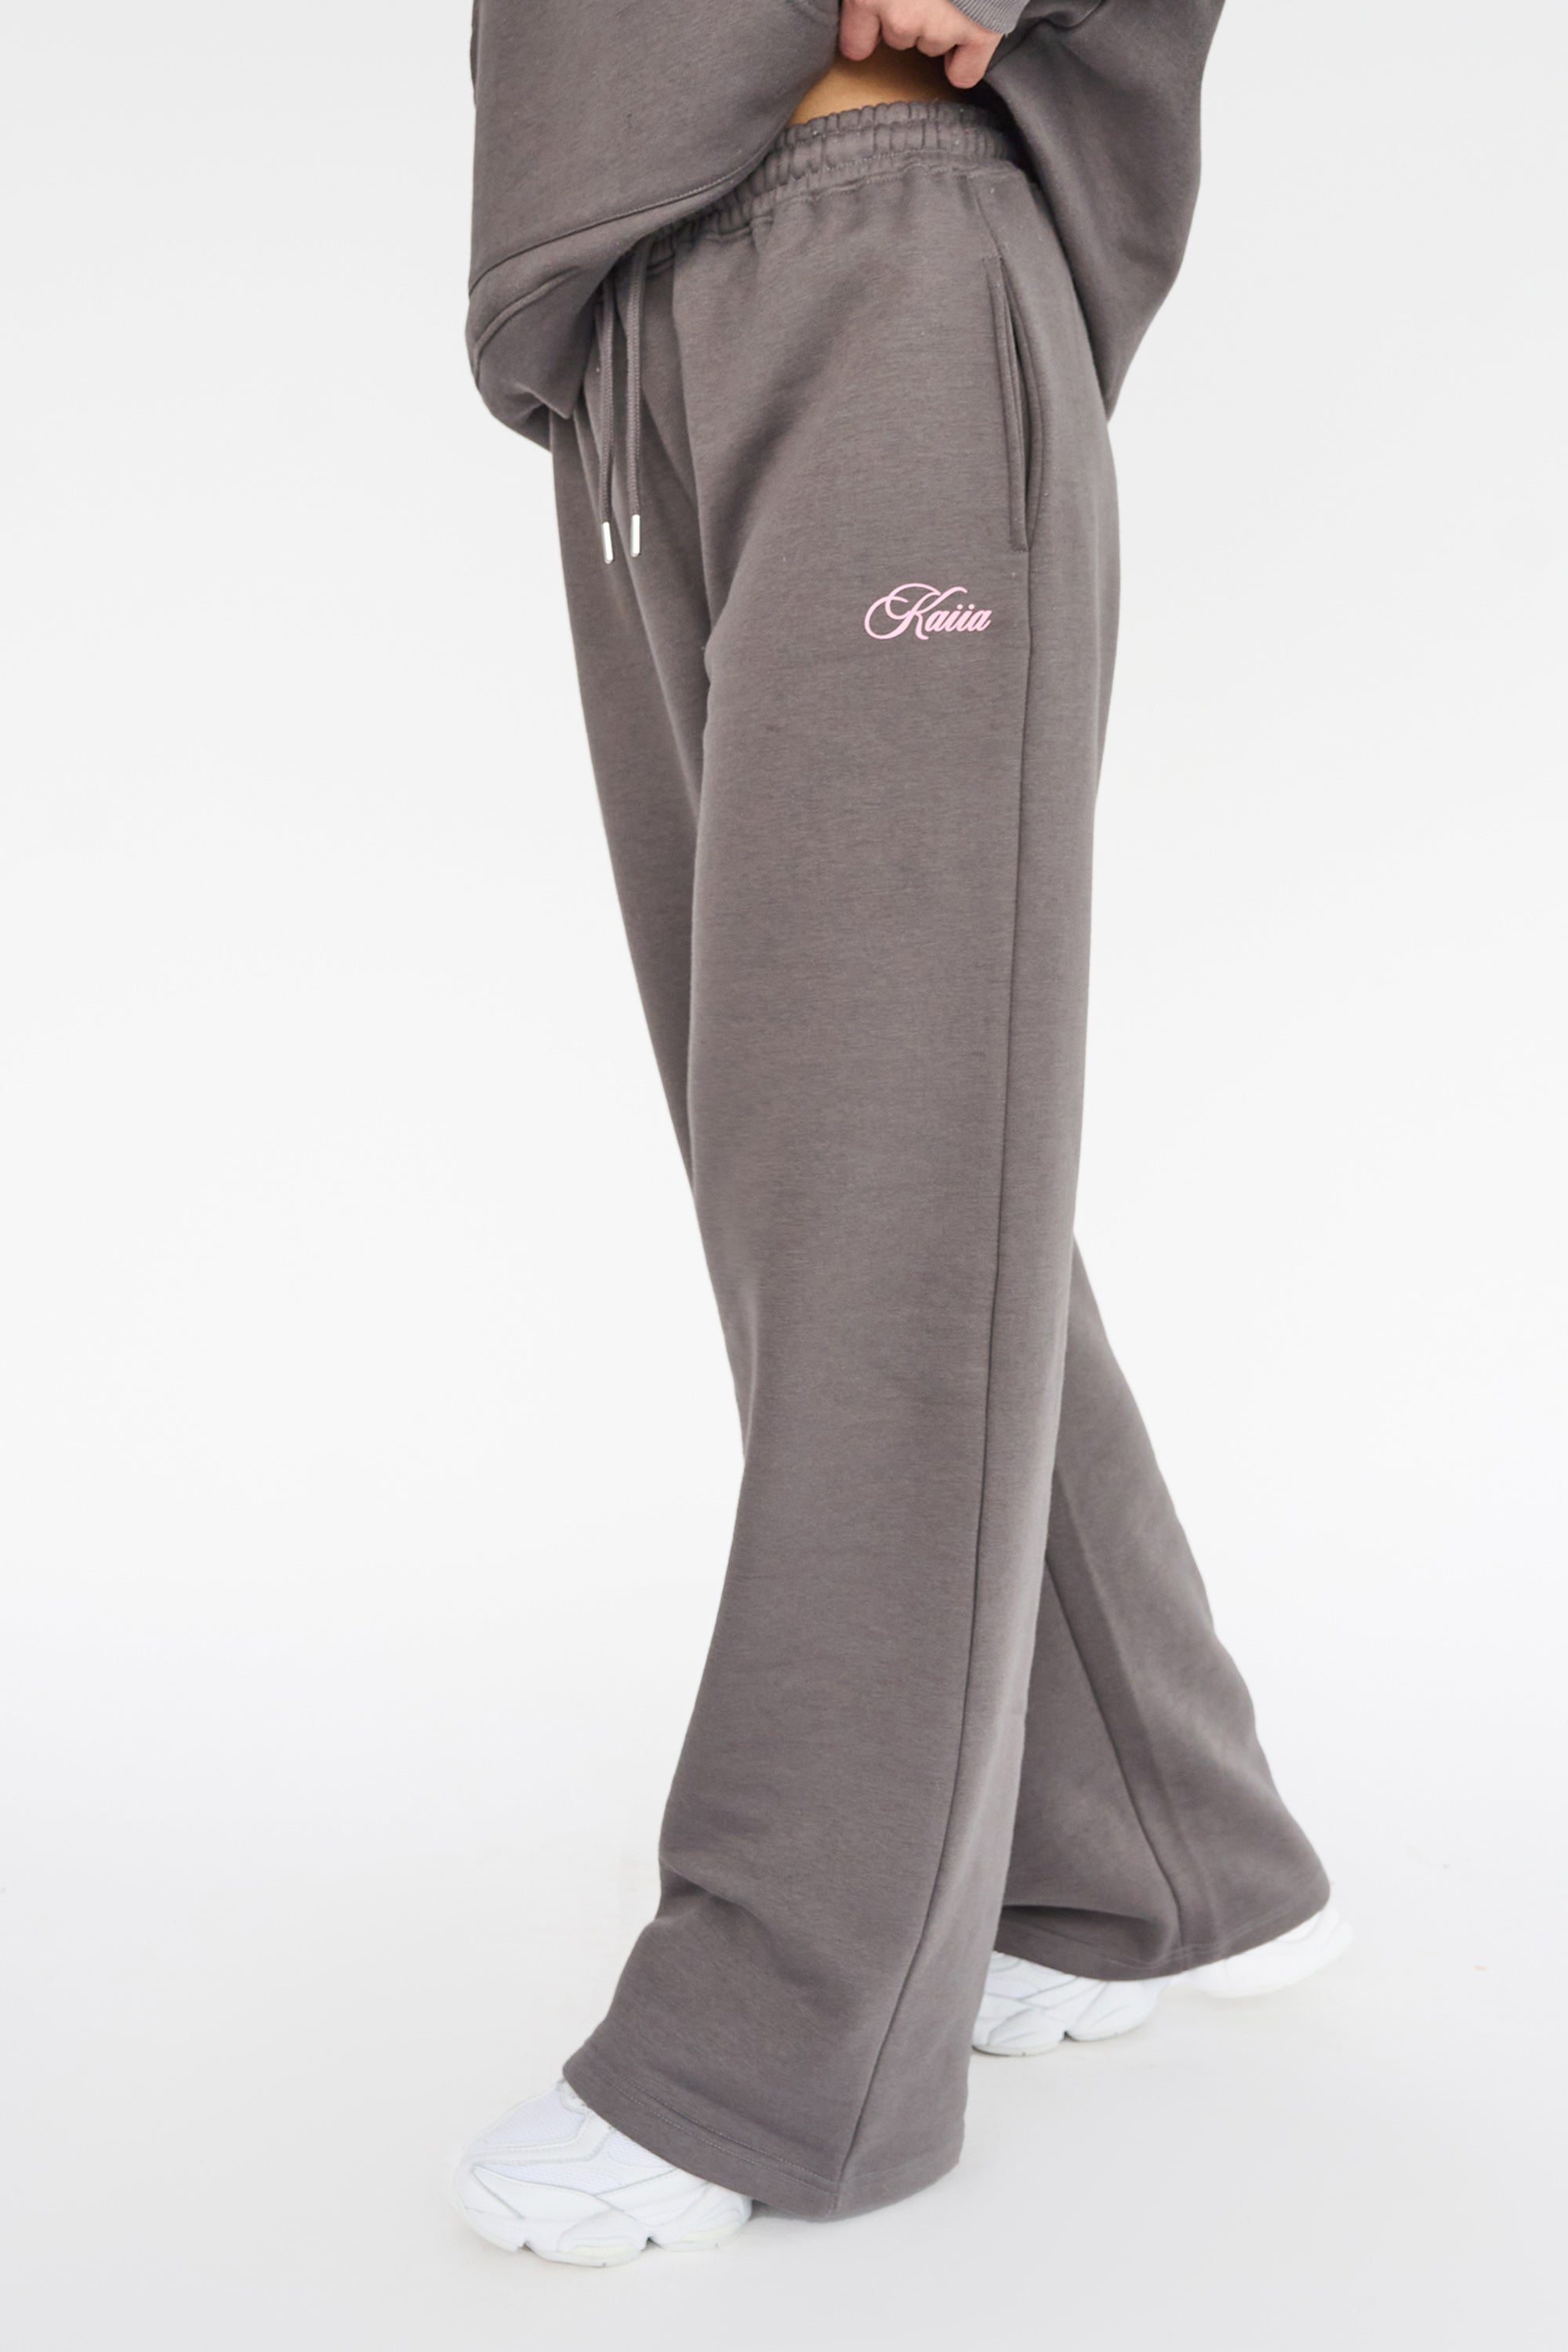 Kaiia the Label Logo Wide Leg Joggers Dark Grey with Pink